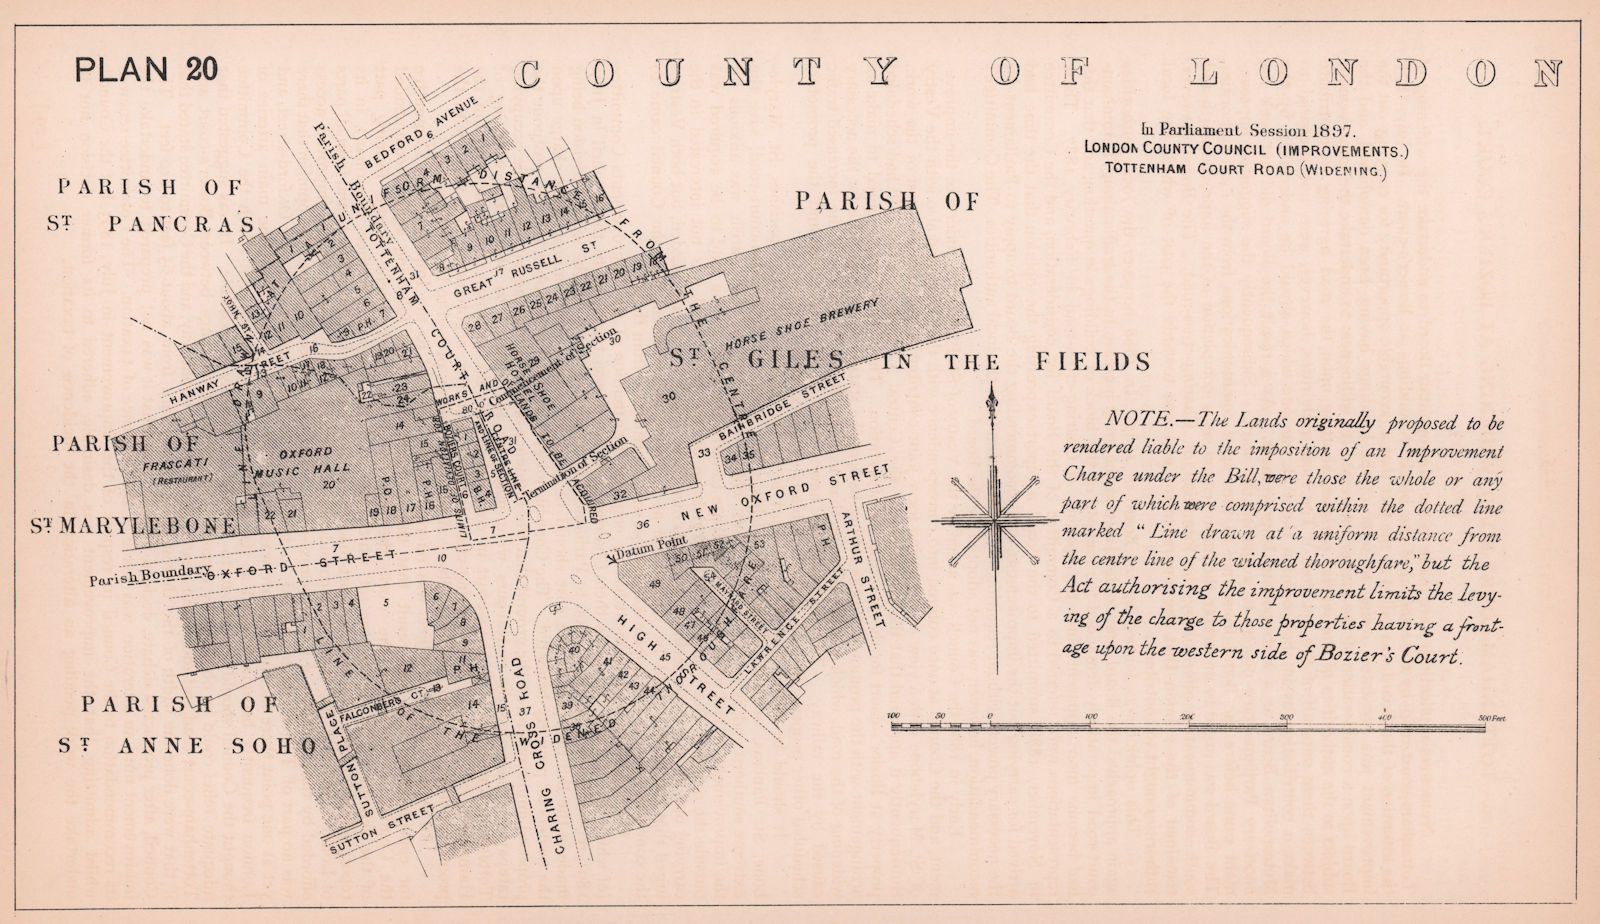 1897 Tottenham Court Road widening. Charing Cross Road. Oxford Street 1898 map